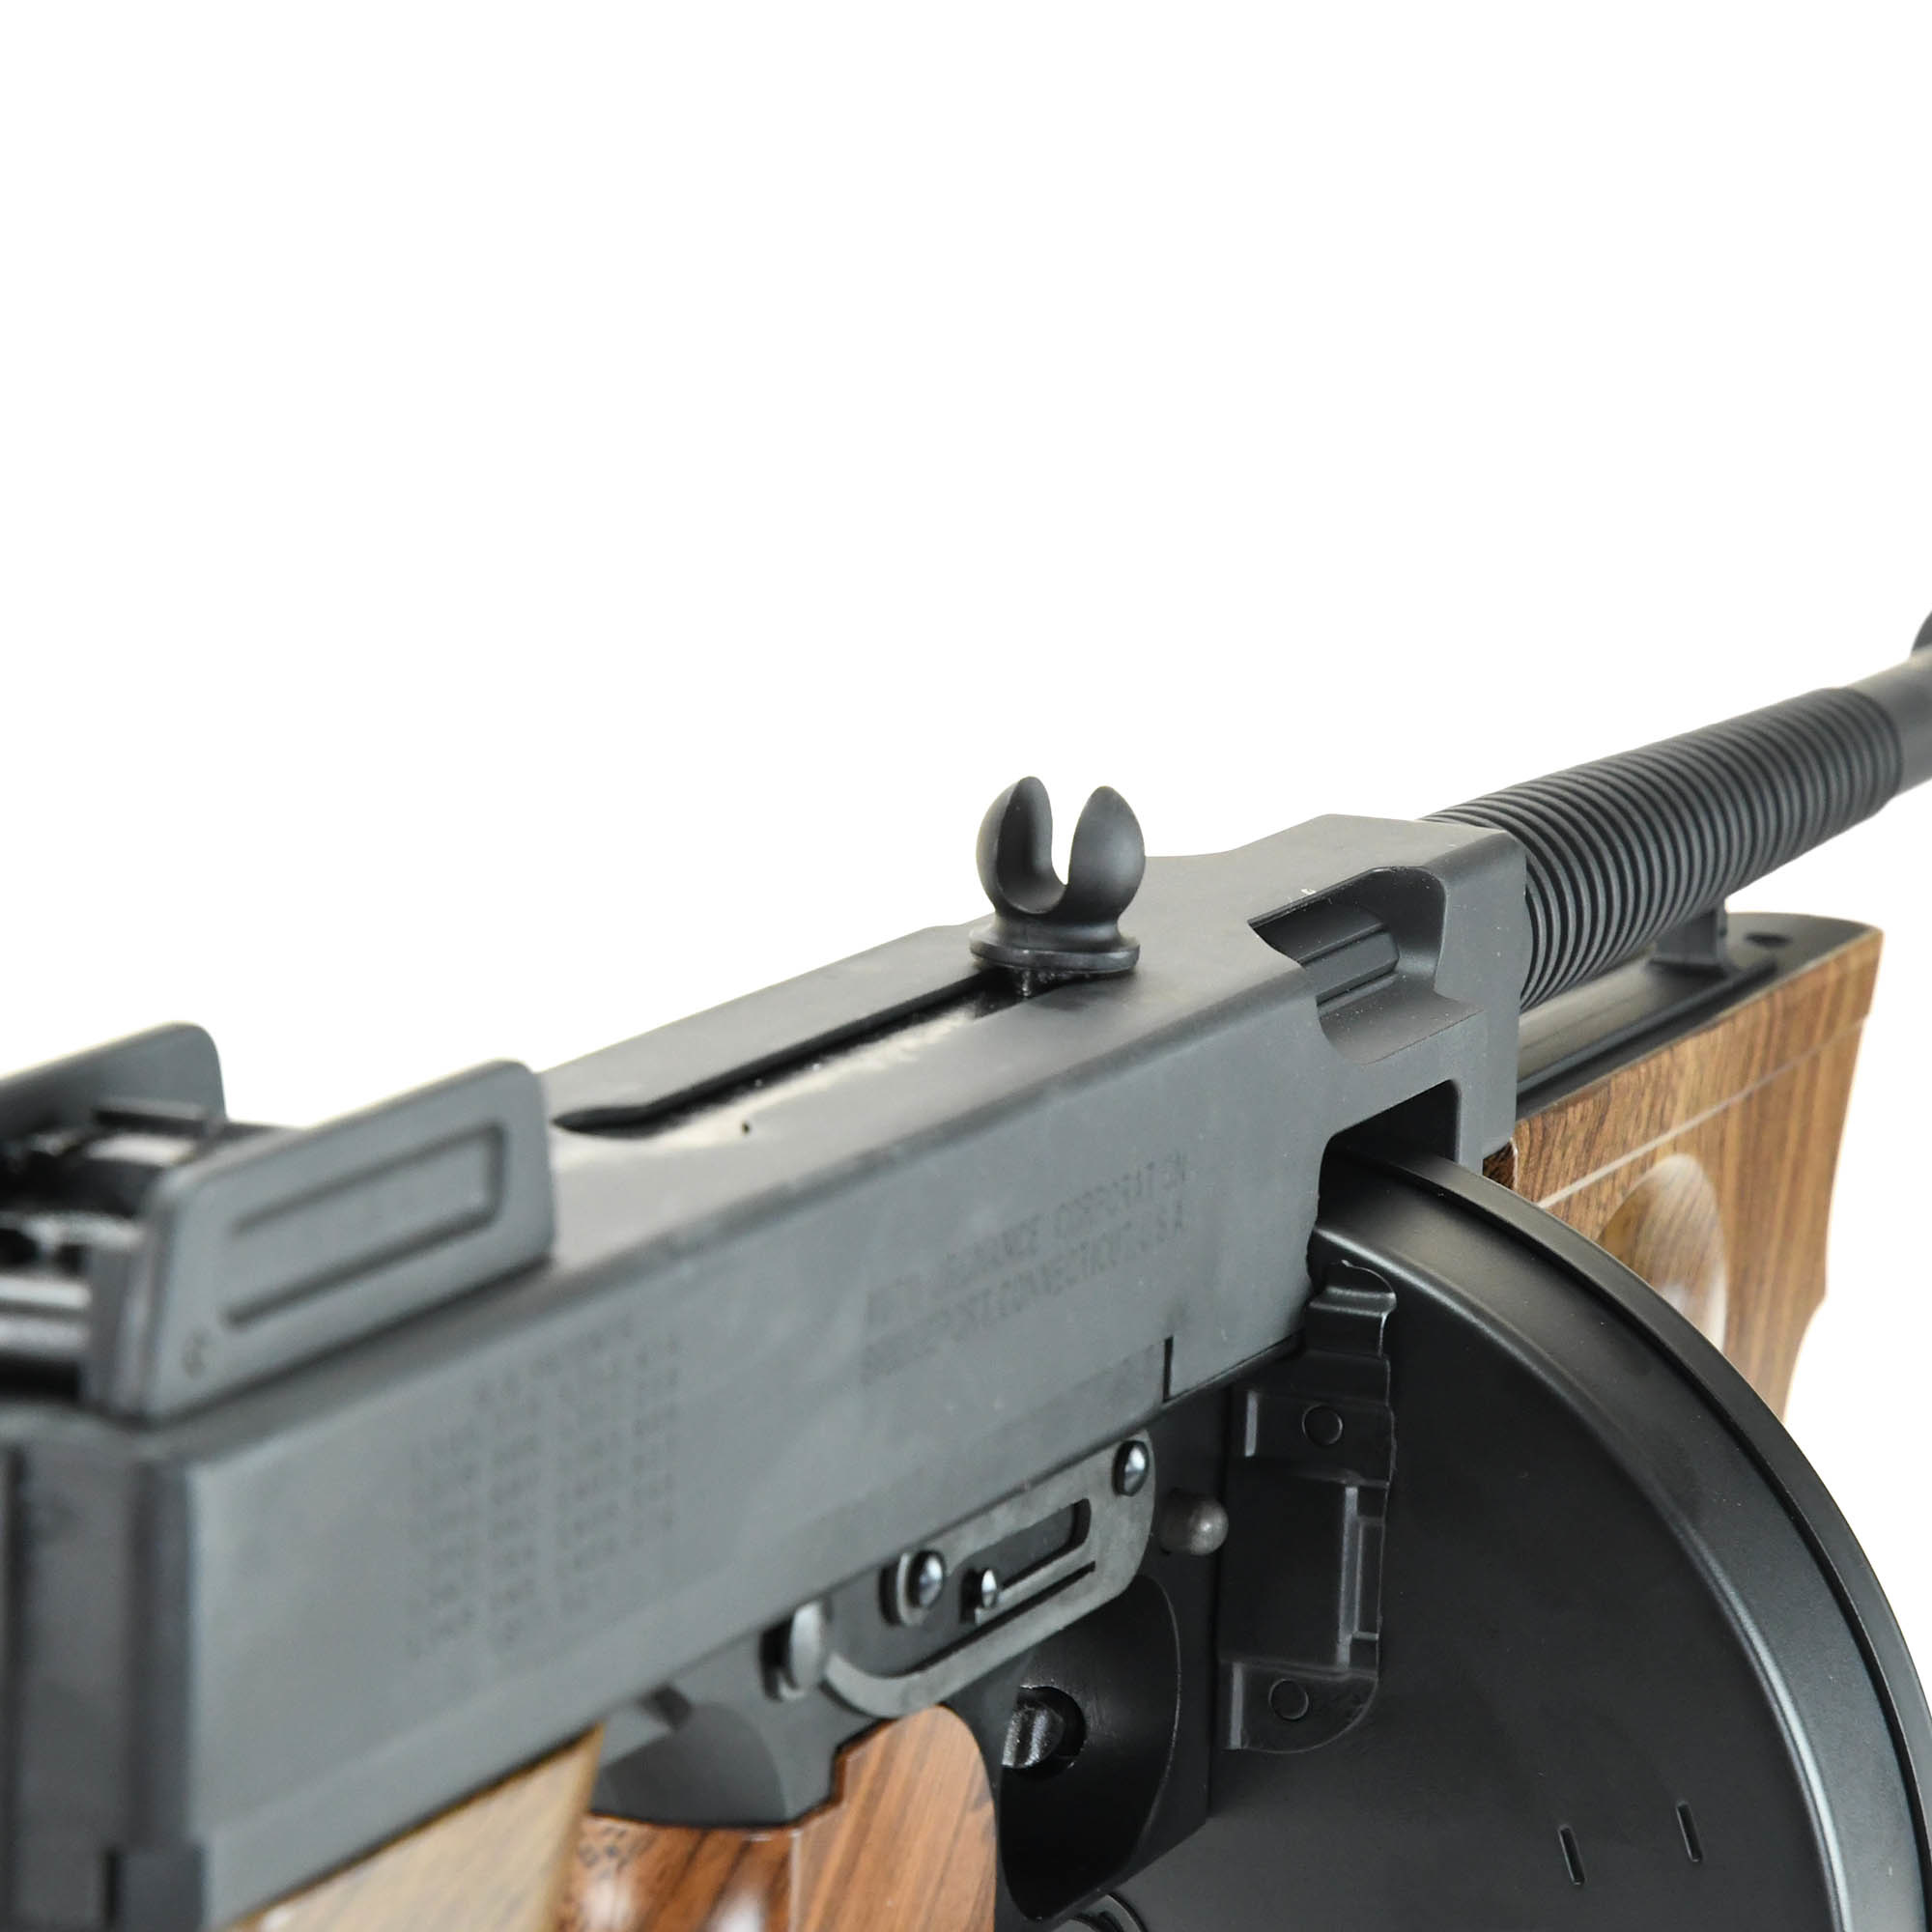 King Arms Thompson M1928 AEG 1.49 Joule - BK/Wooden optic